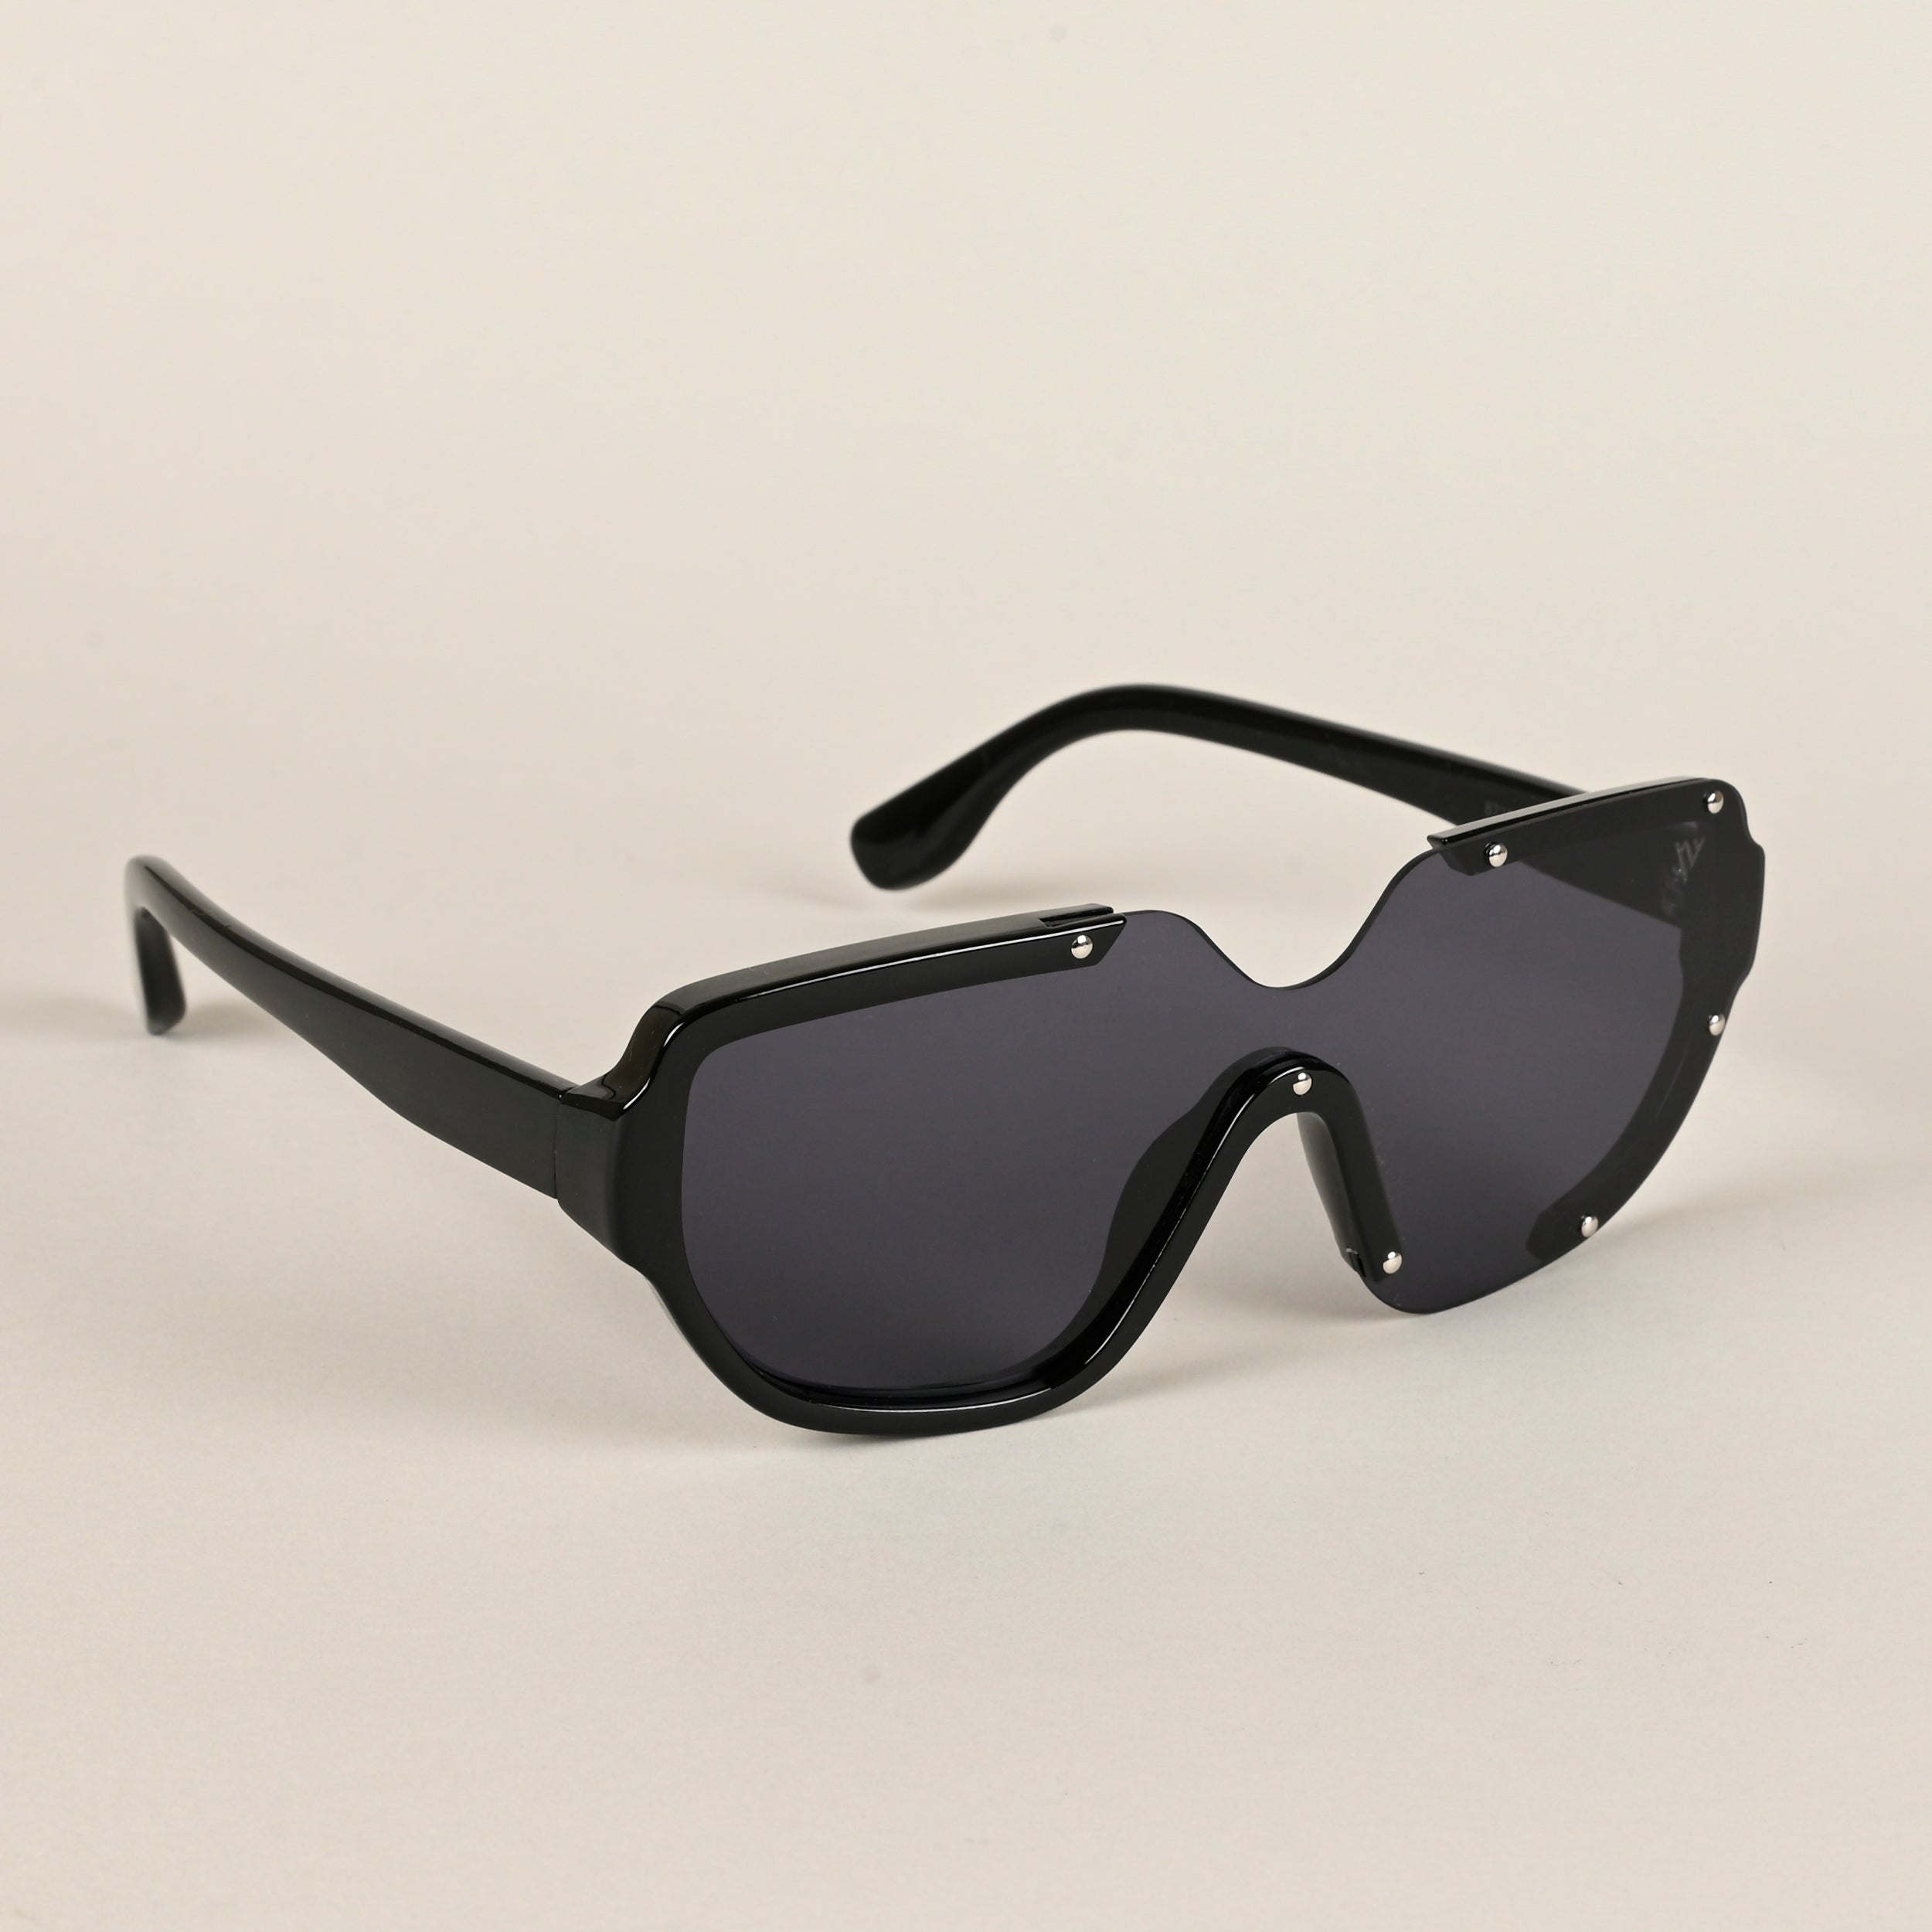 Voyage Black Wayfarer Sunglasses for Men & Women (8721MG4183)